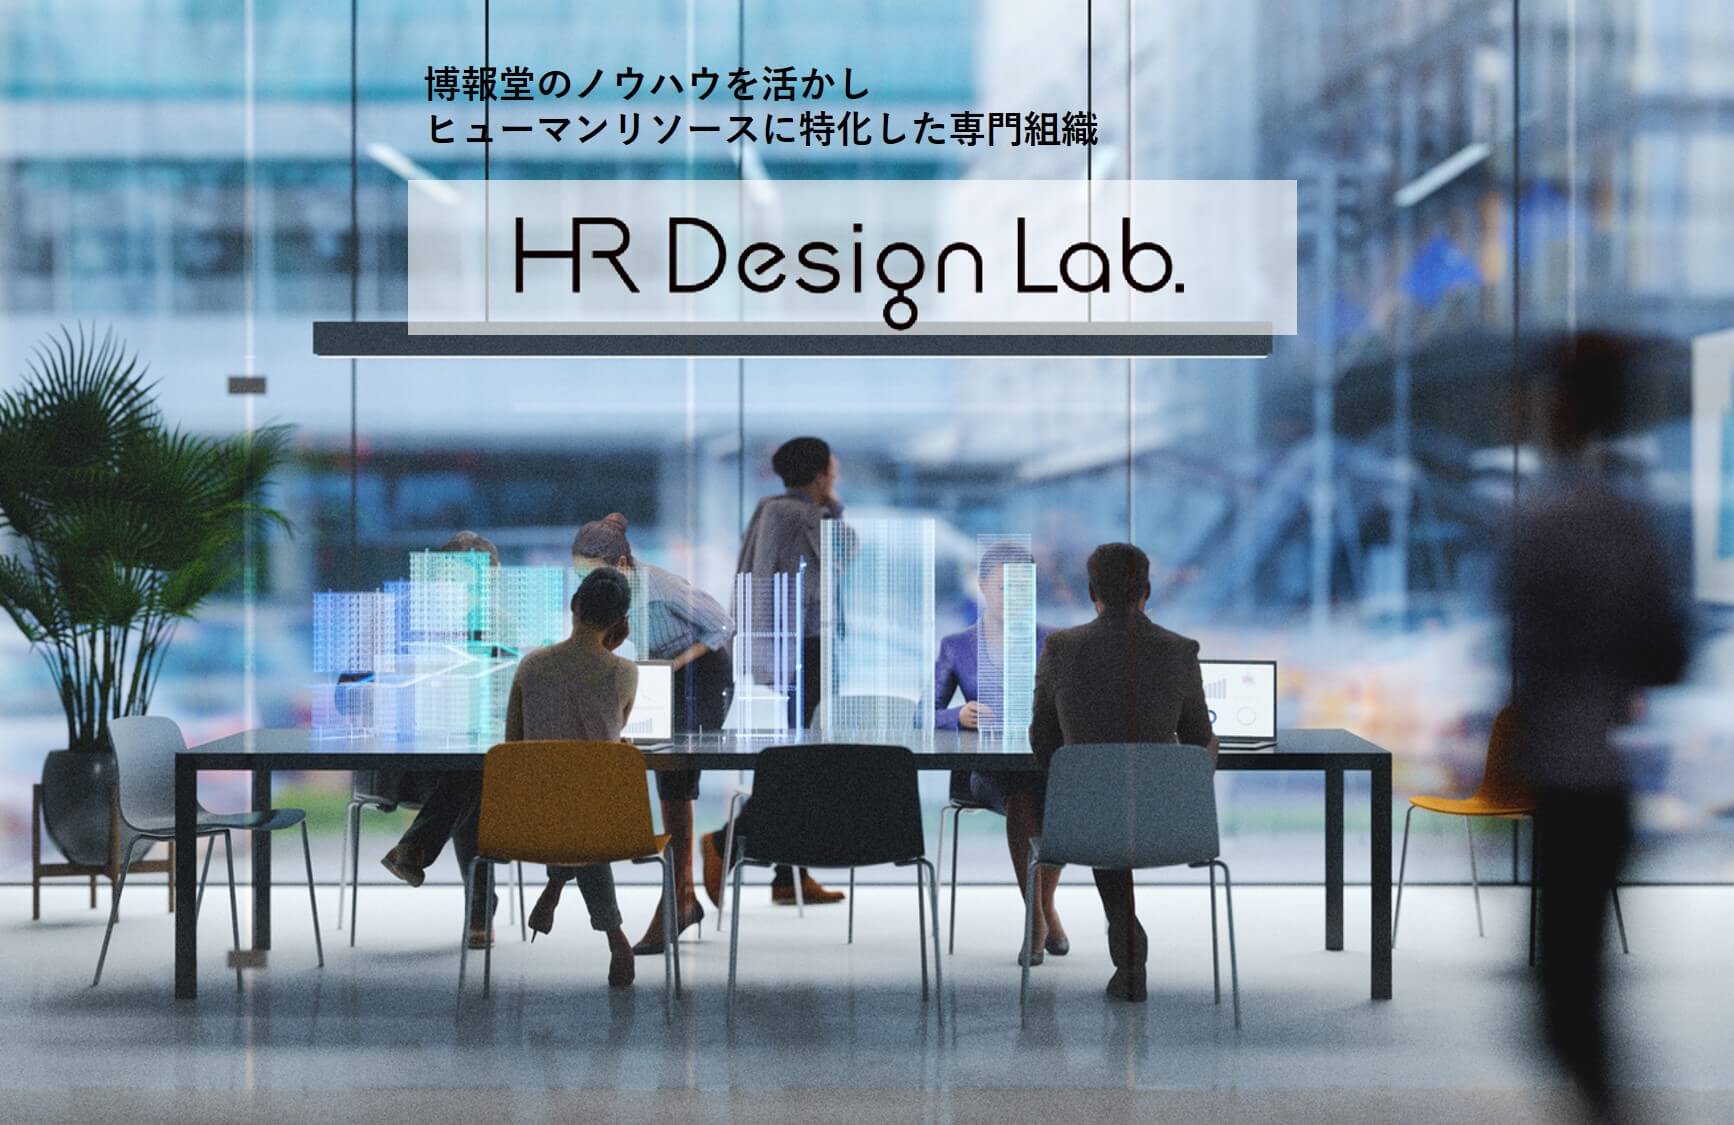 HR Design Lab.